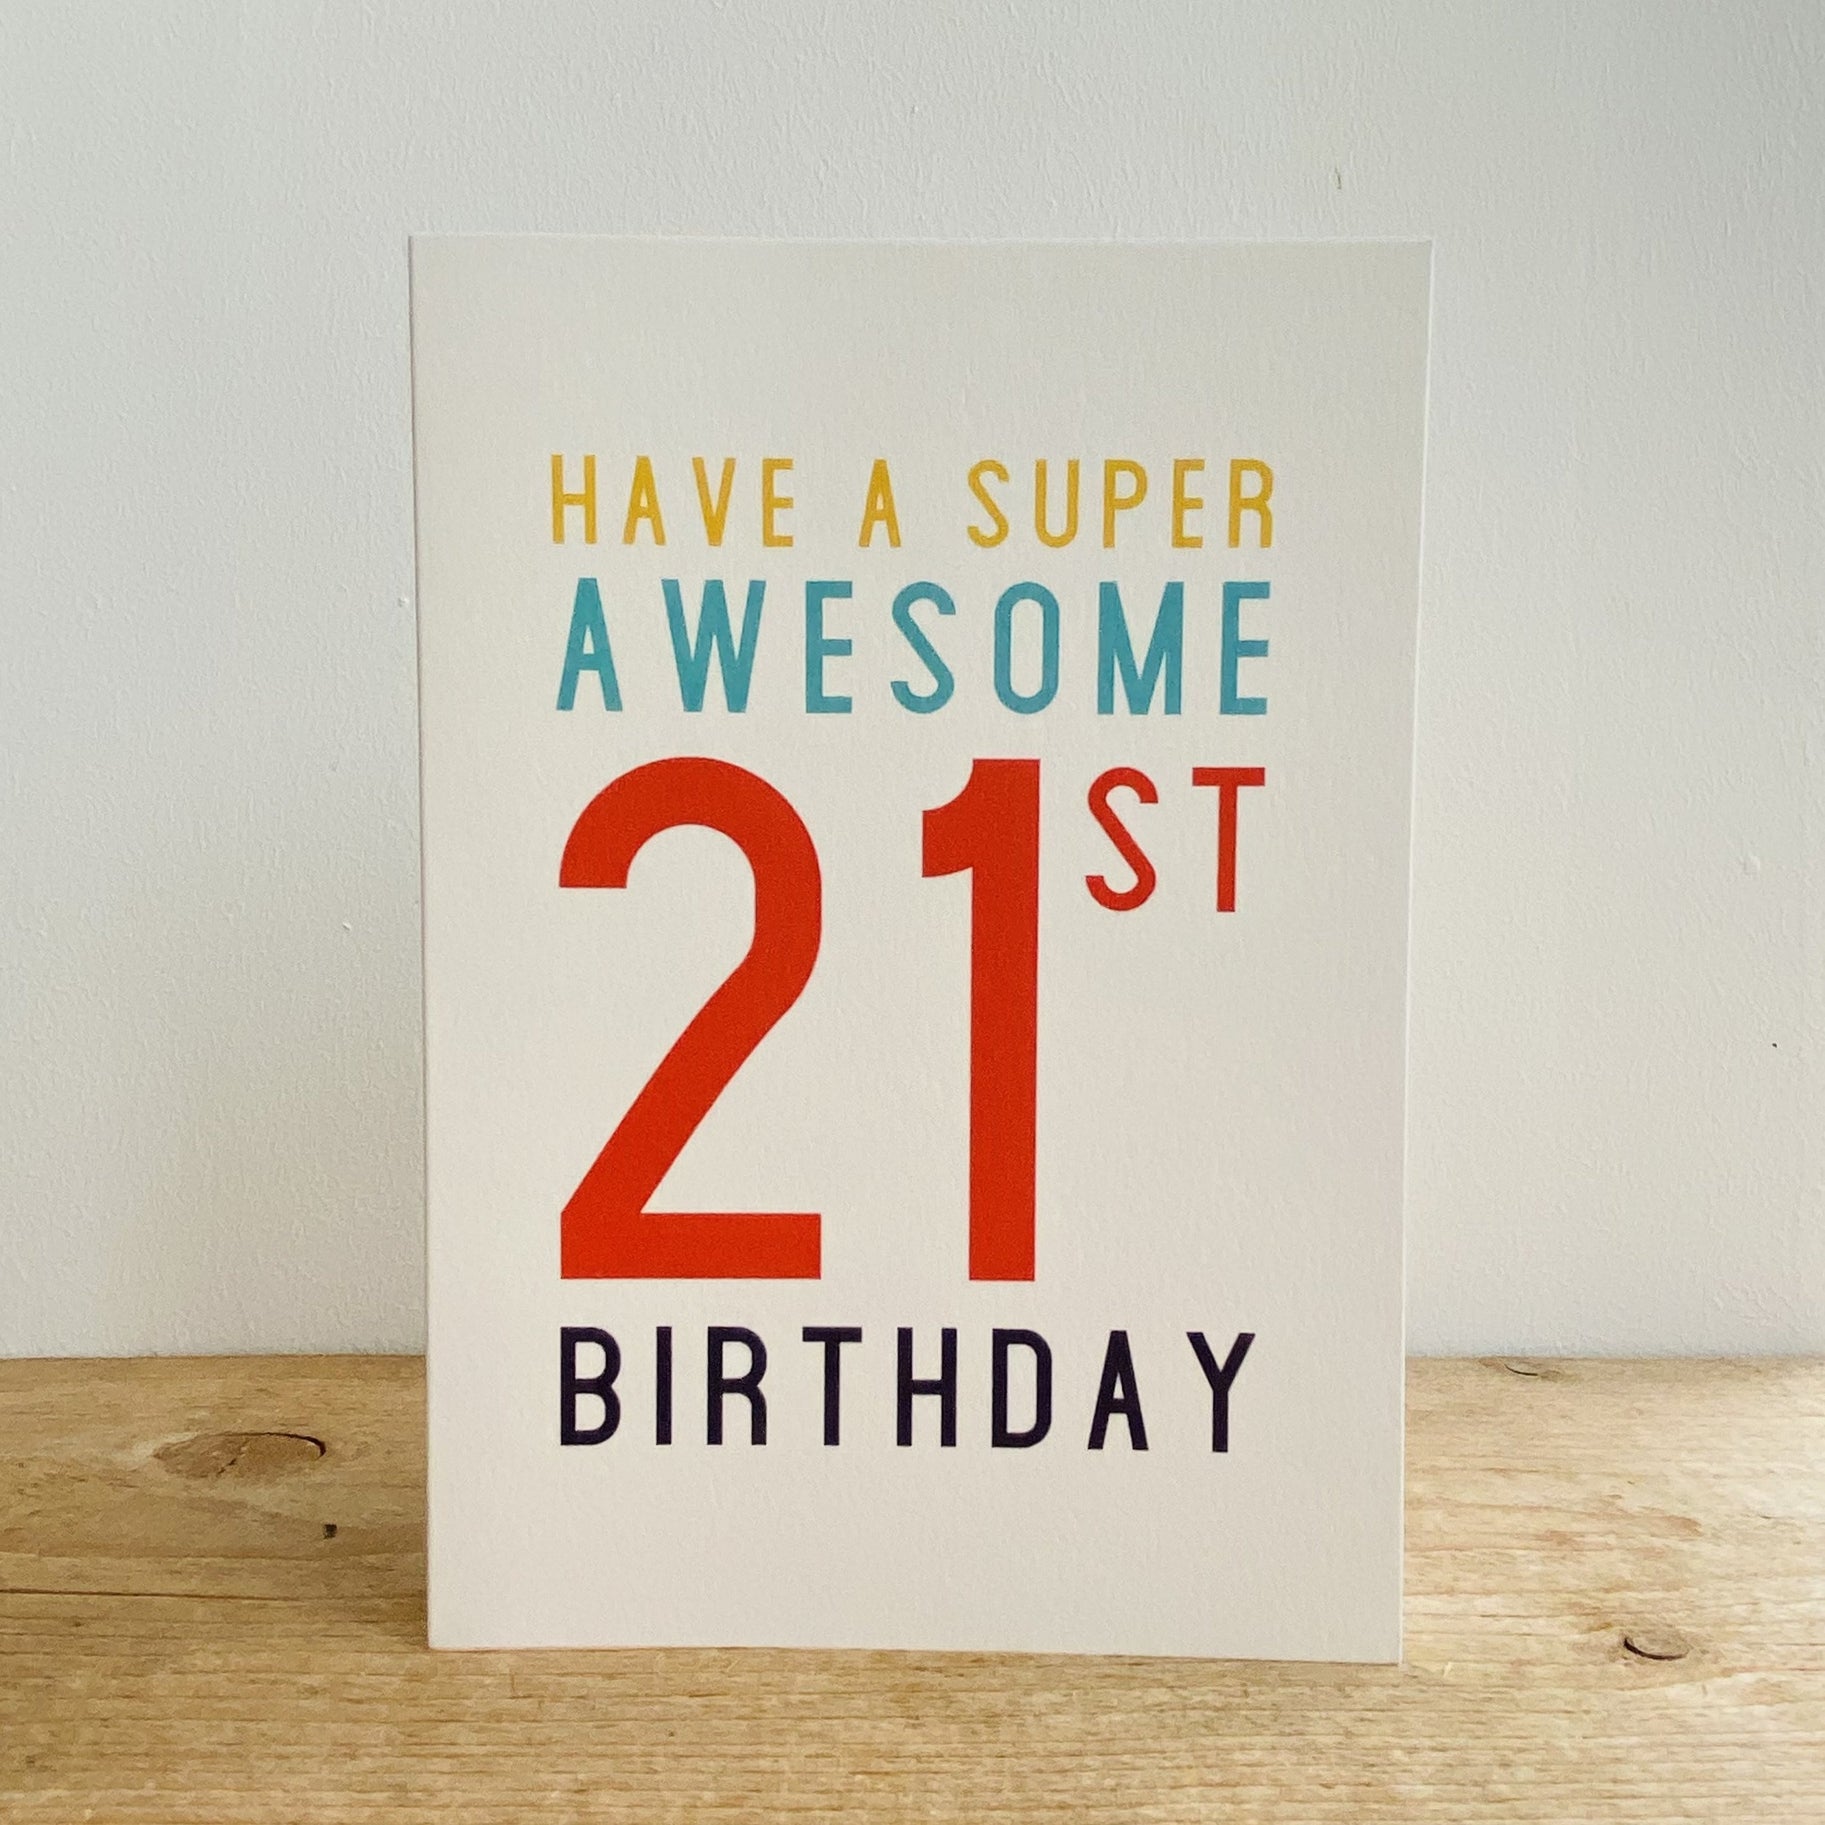 21st birthday cards